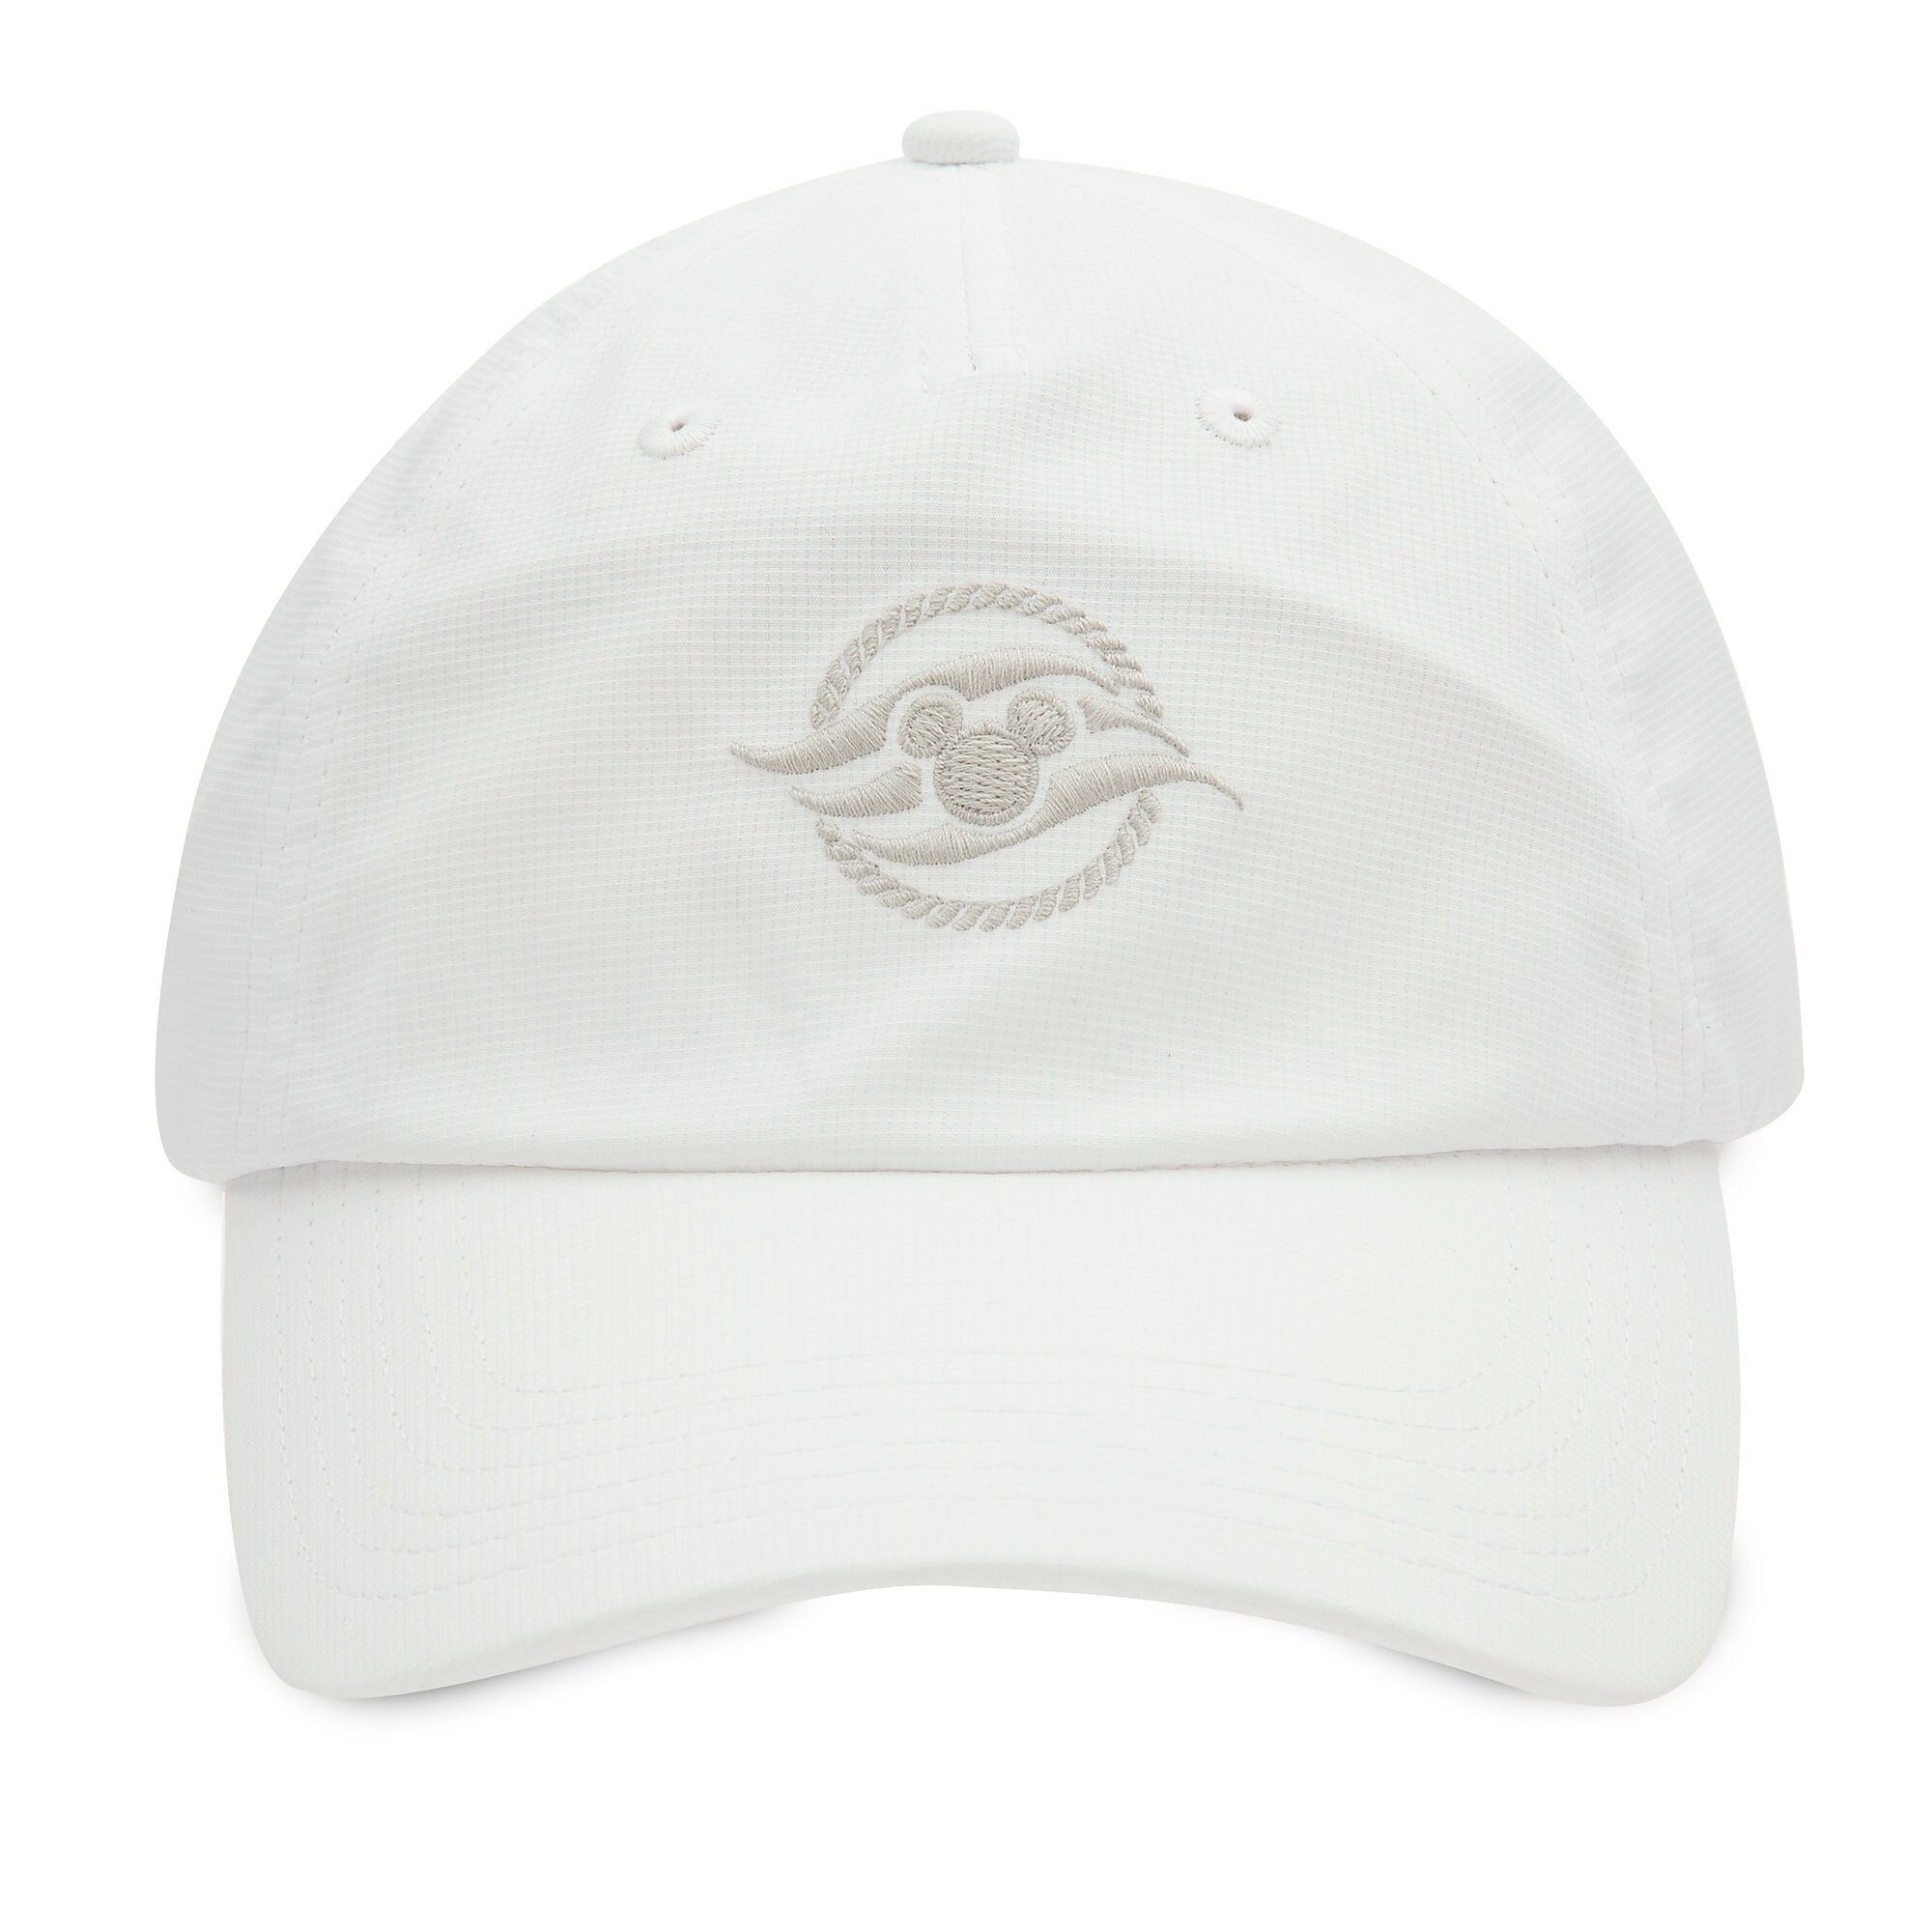 Disney Cruise Line Baseball Hat for Adults - White